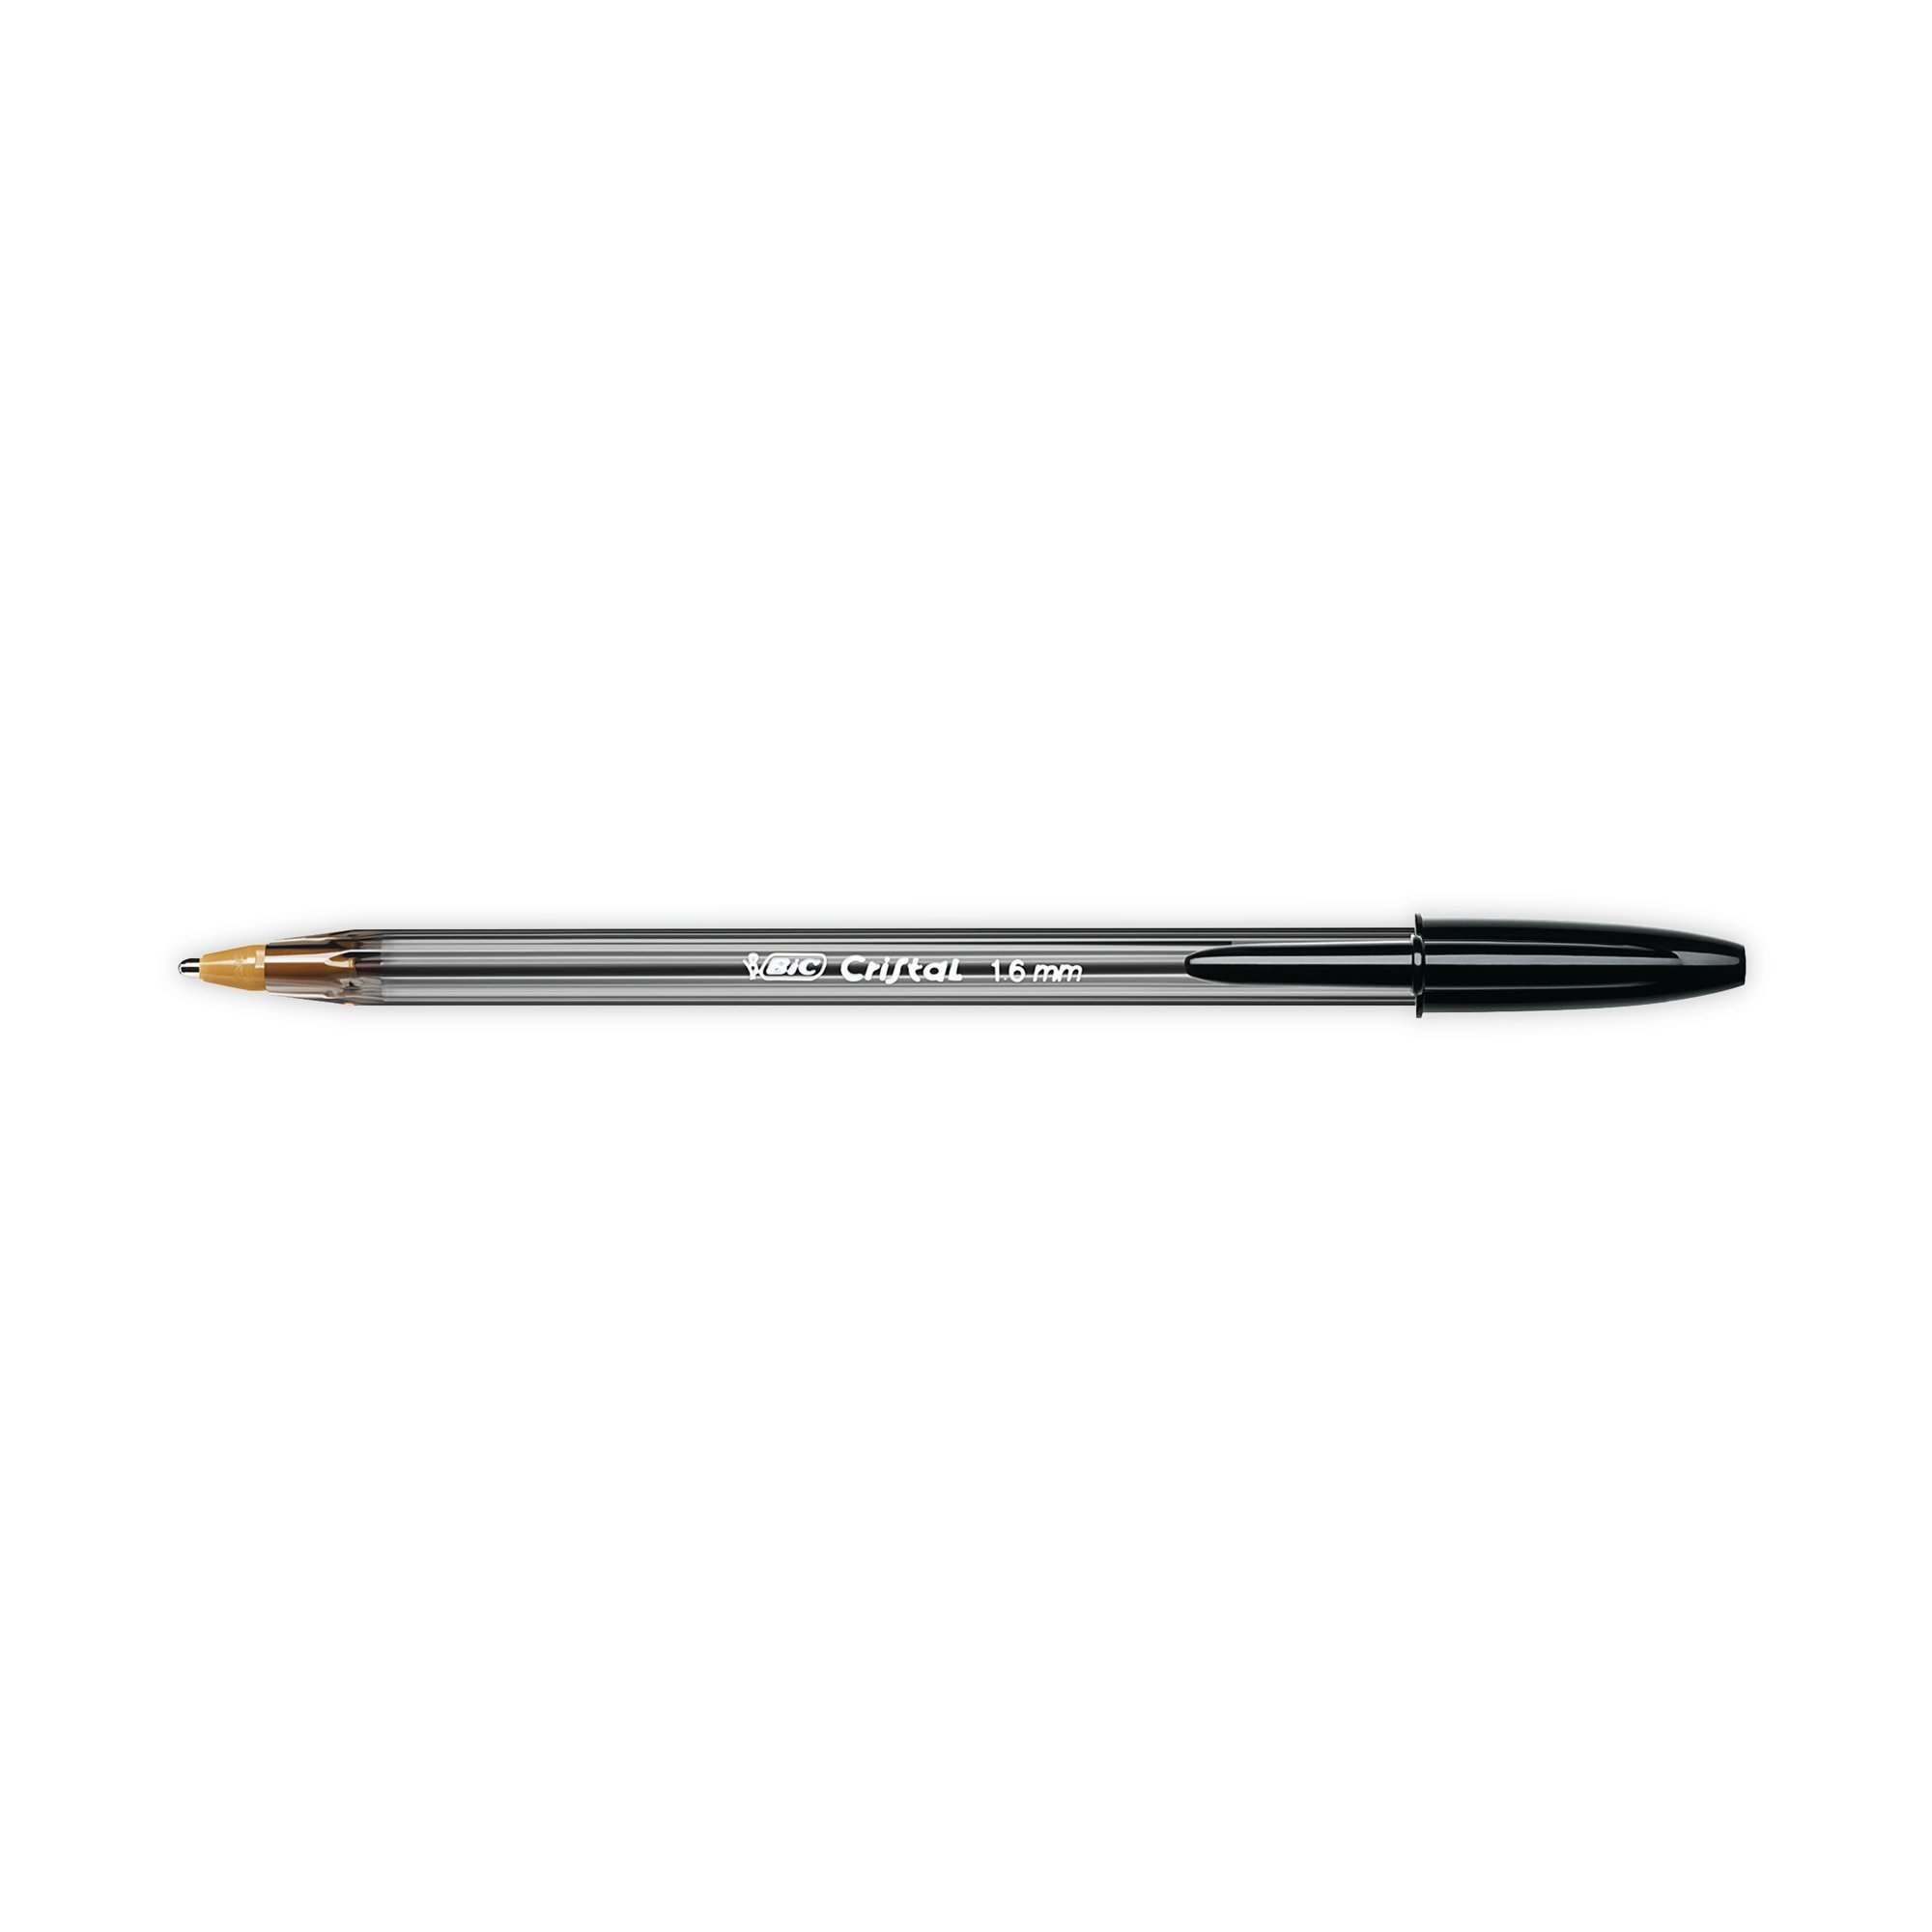 Q-Connect Ballpoint Pen Medium Black (Pack of 50) KF26040